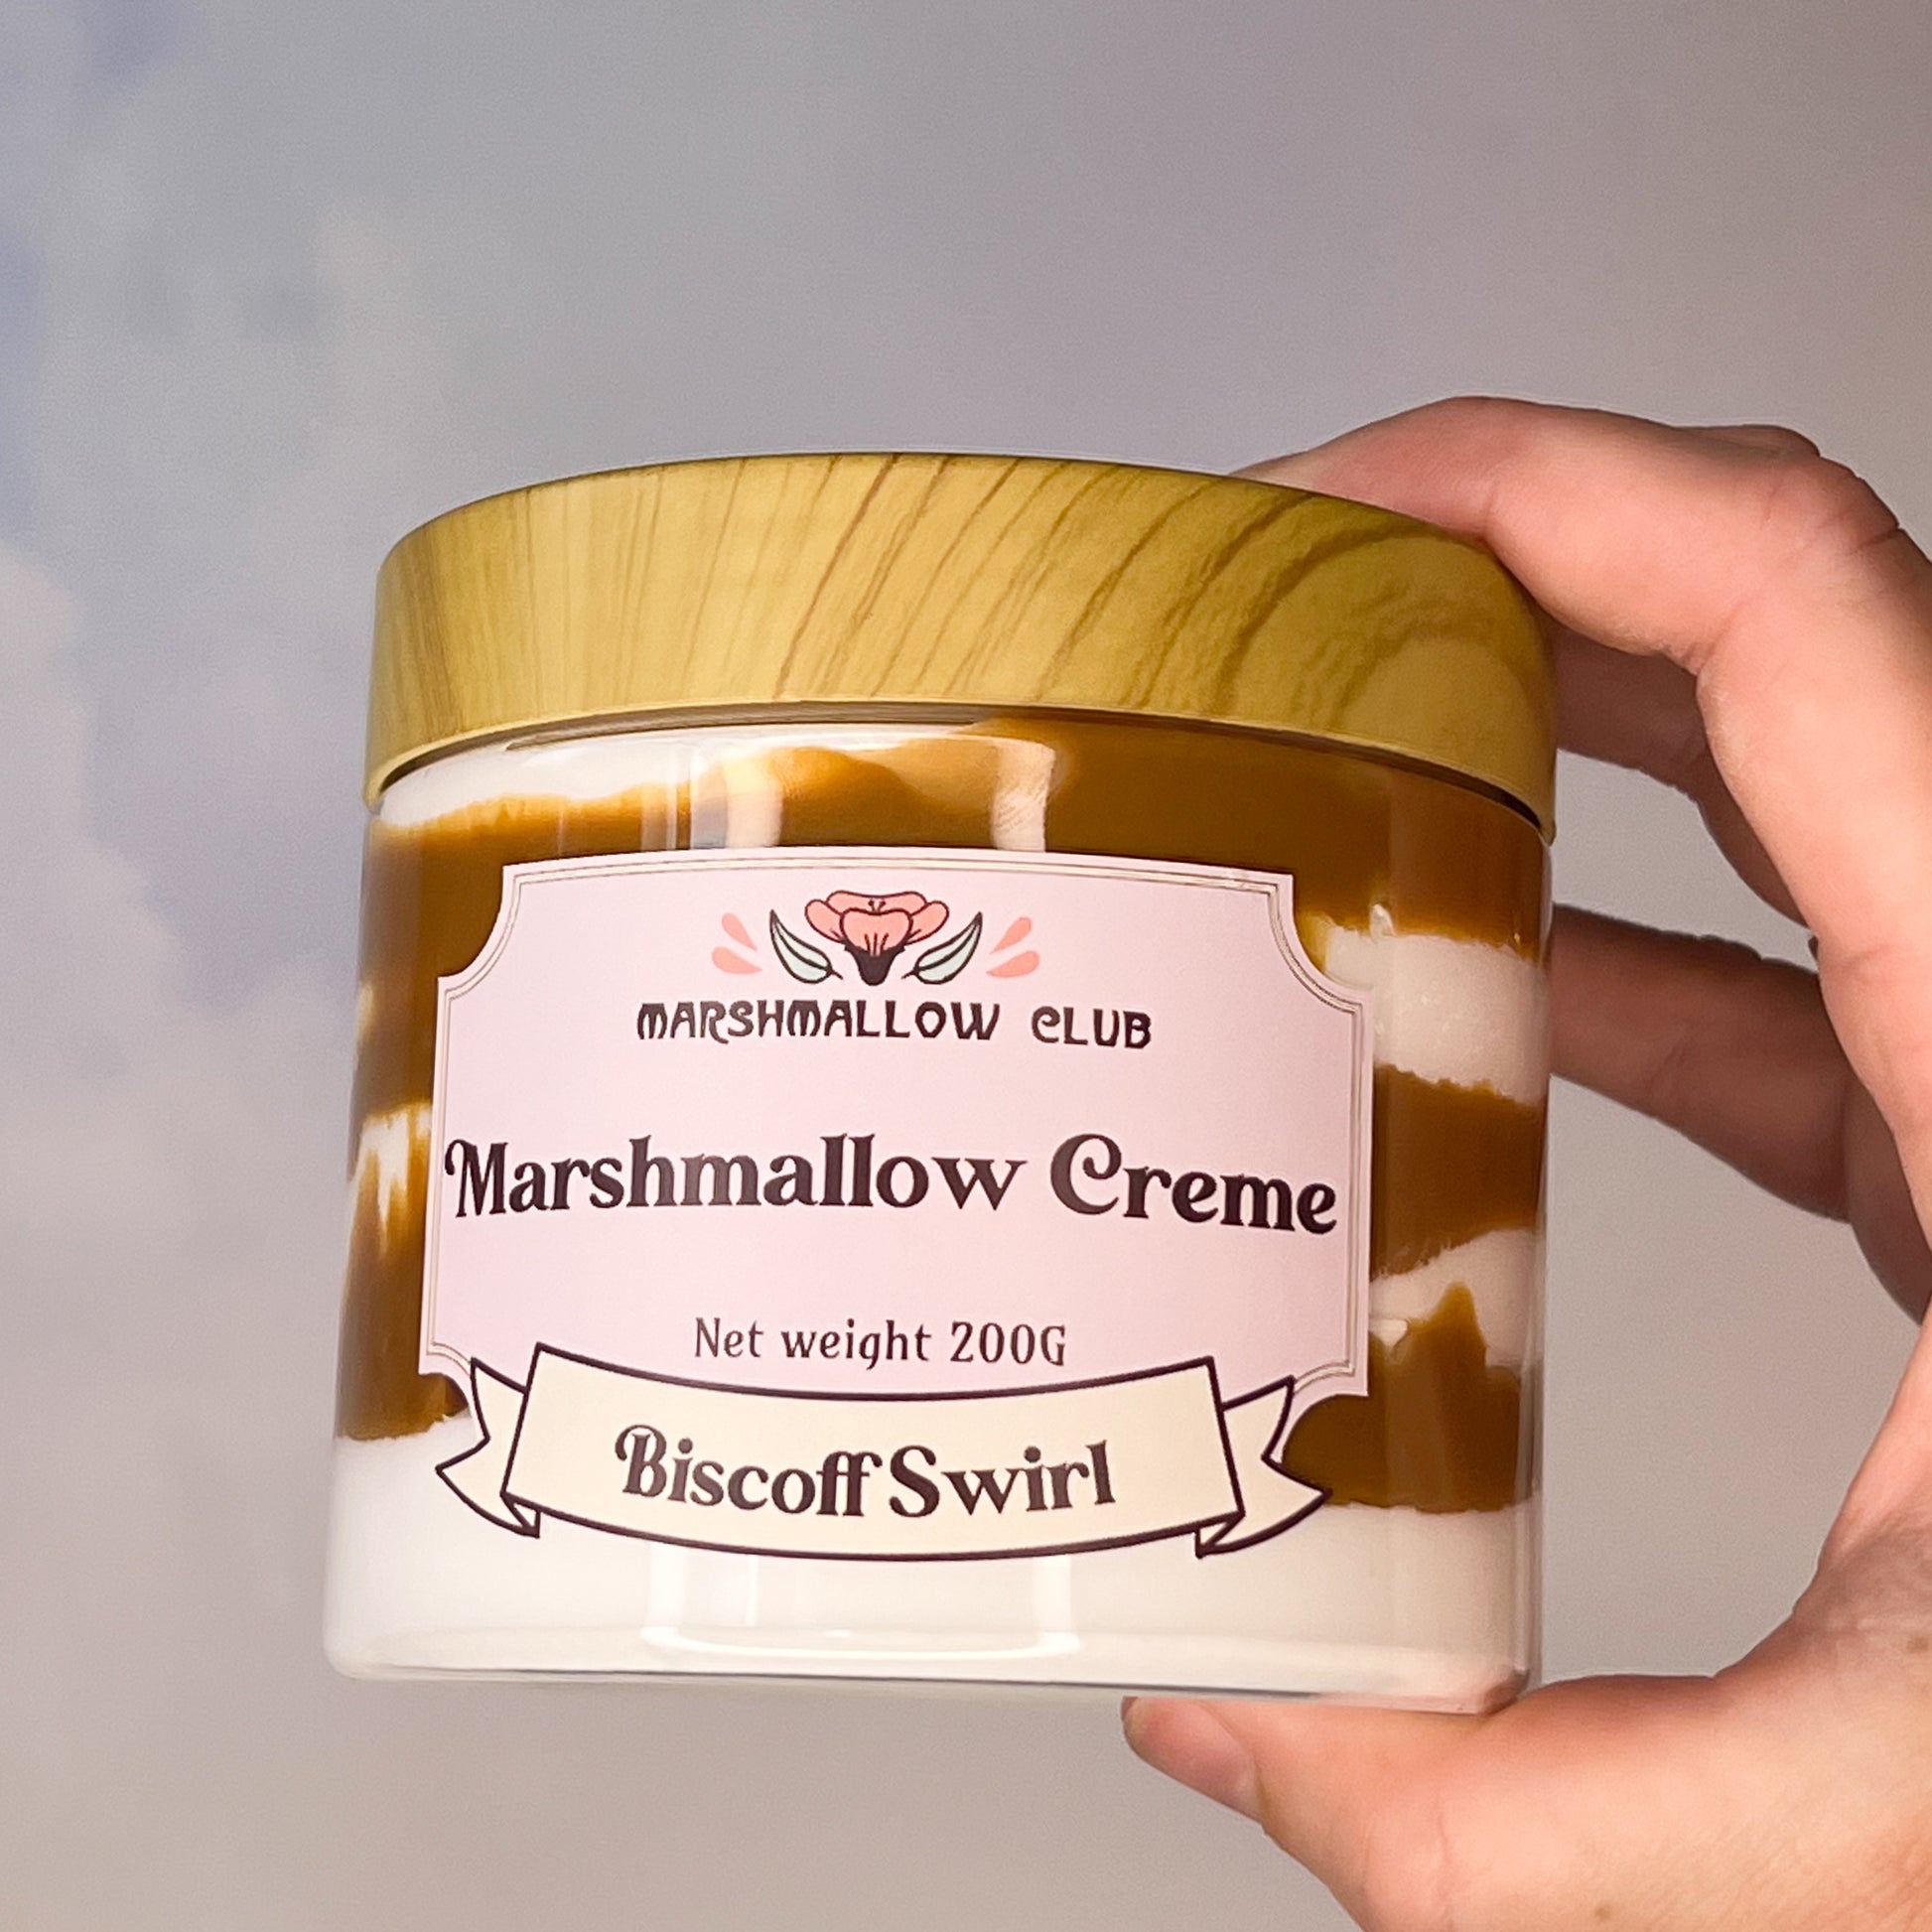 Handmade marshmallow creme with Biscoff swirl 